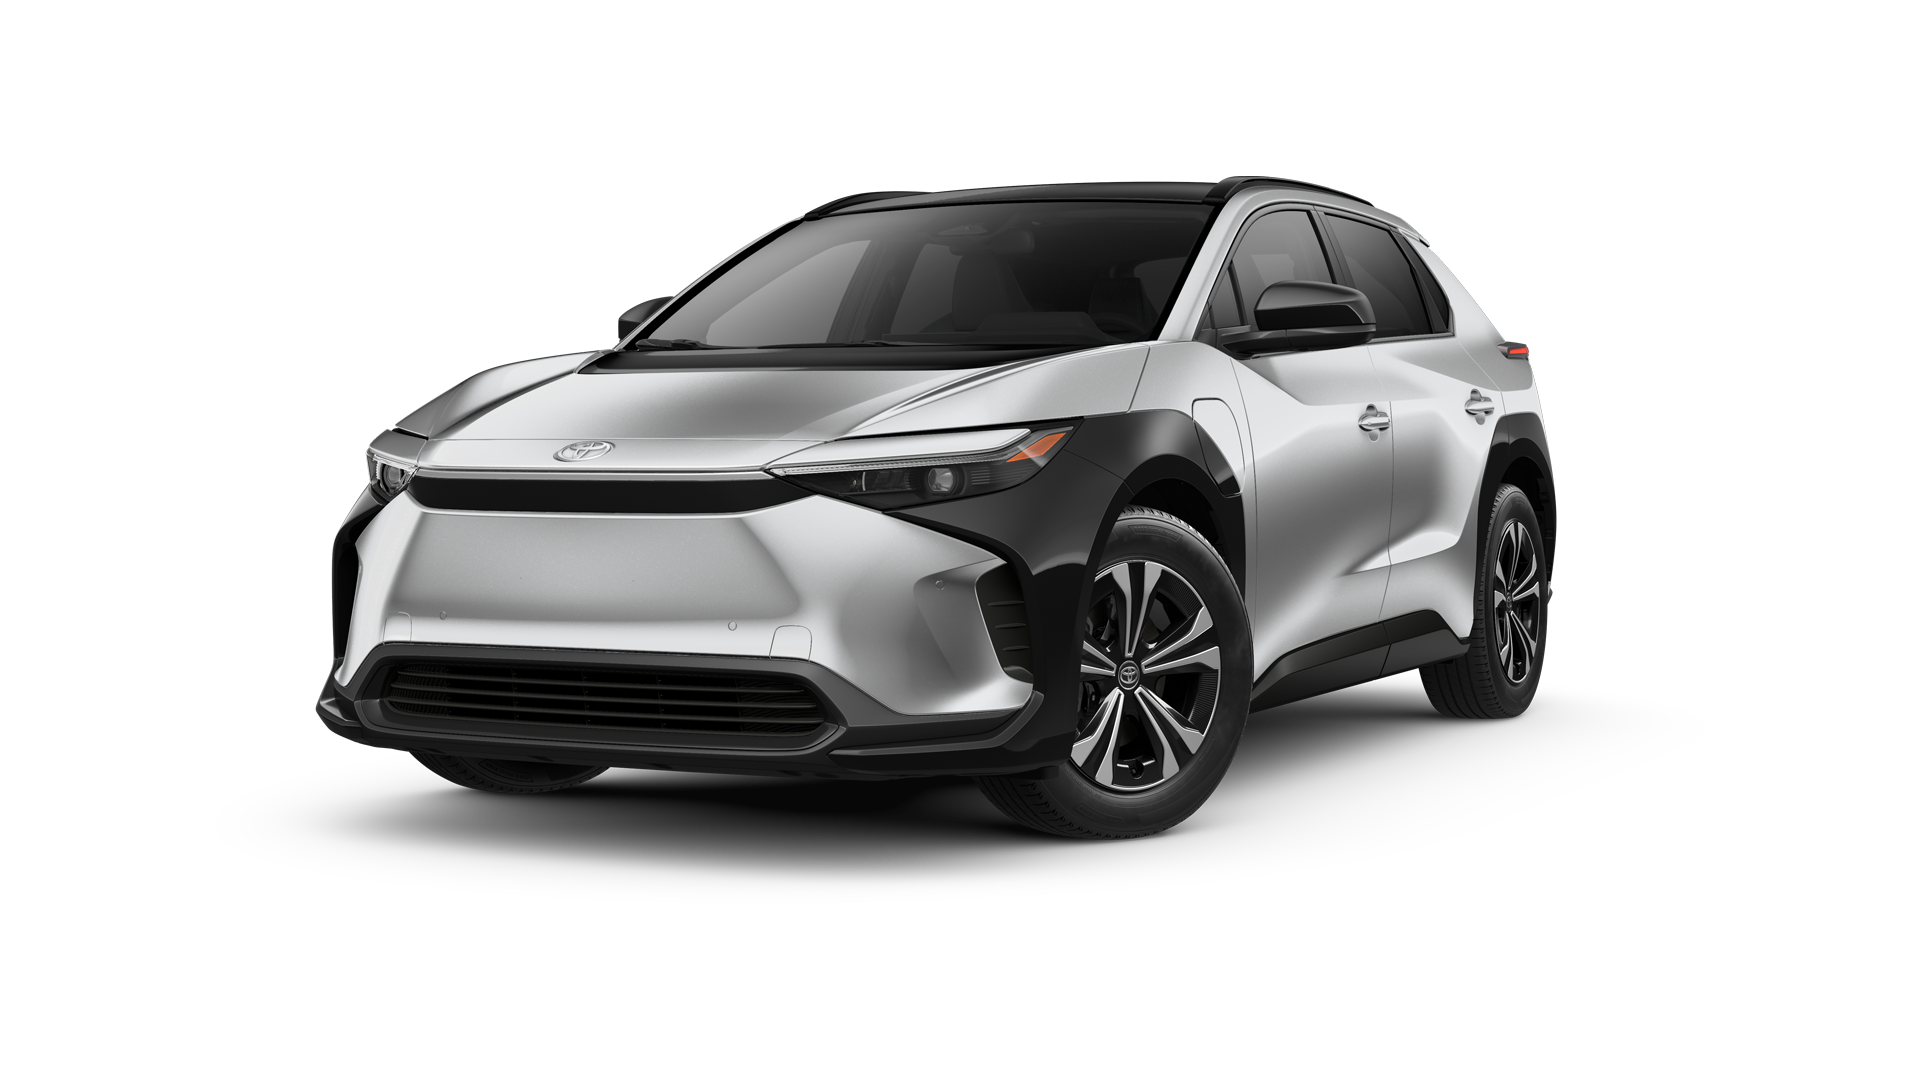 2024 Toyota bZ4X in Elemental Silver Metallic*.